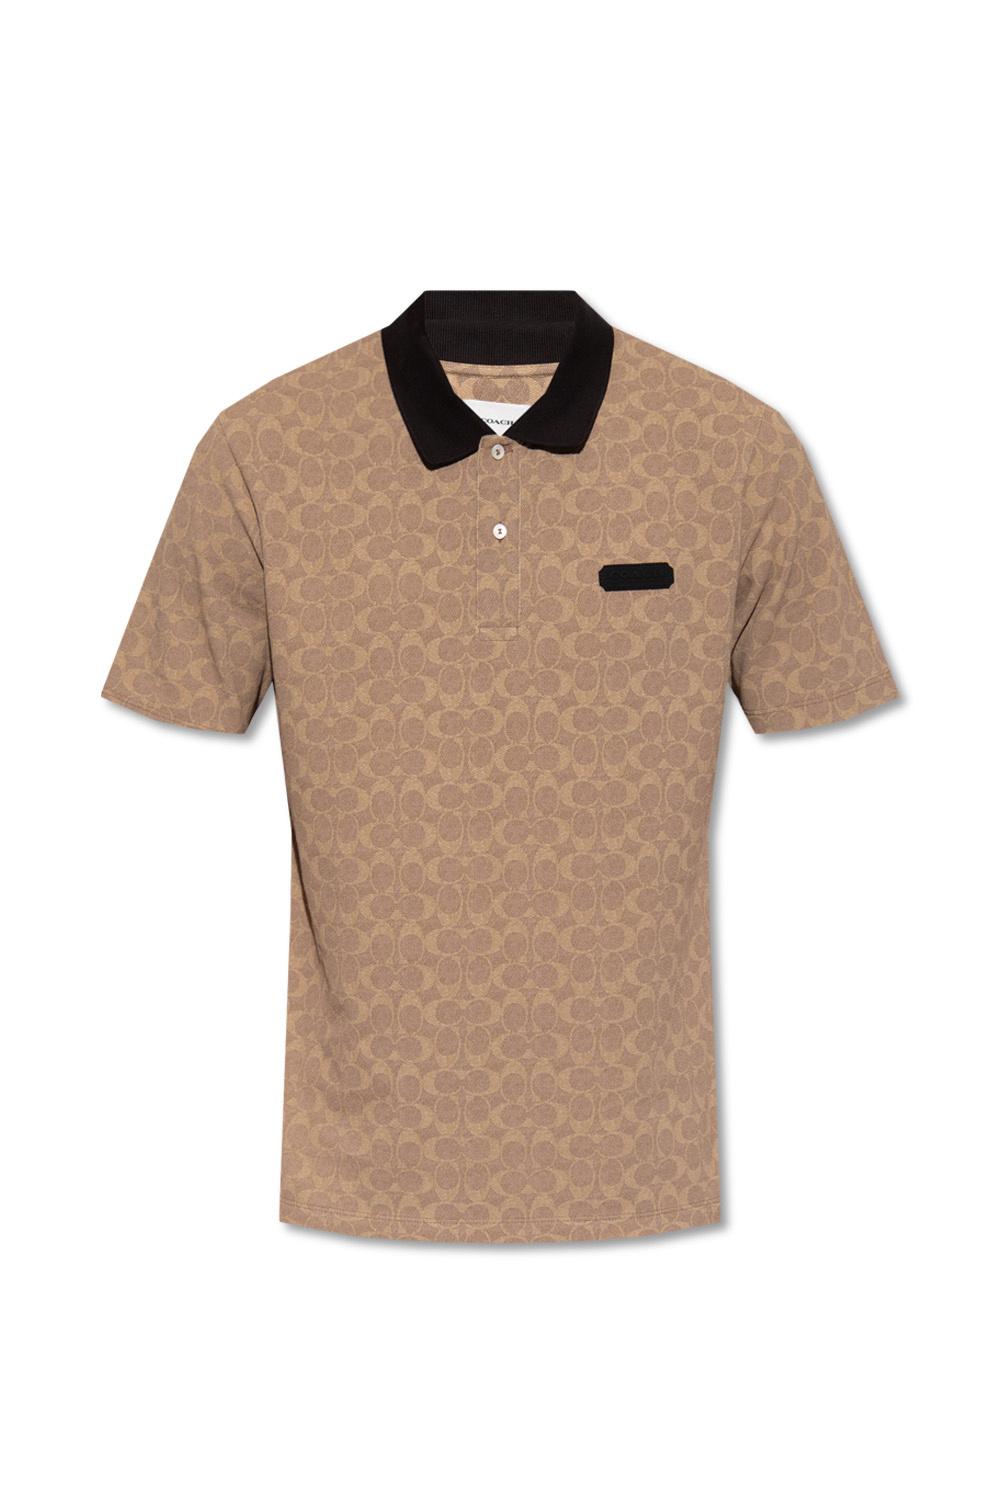 COACH Appliquéd Polo Shirt in Natural for Men | Lyst